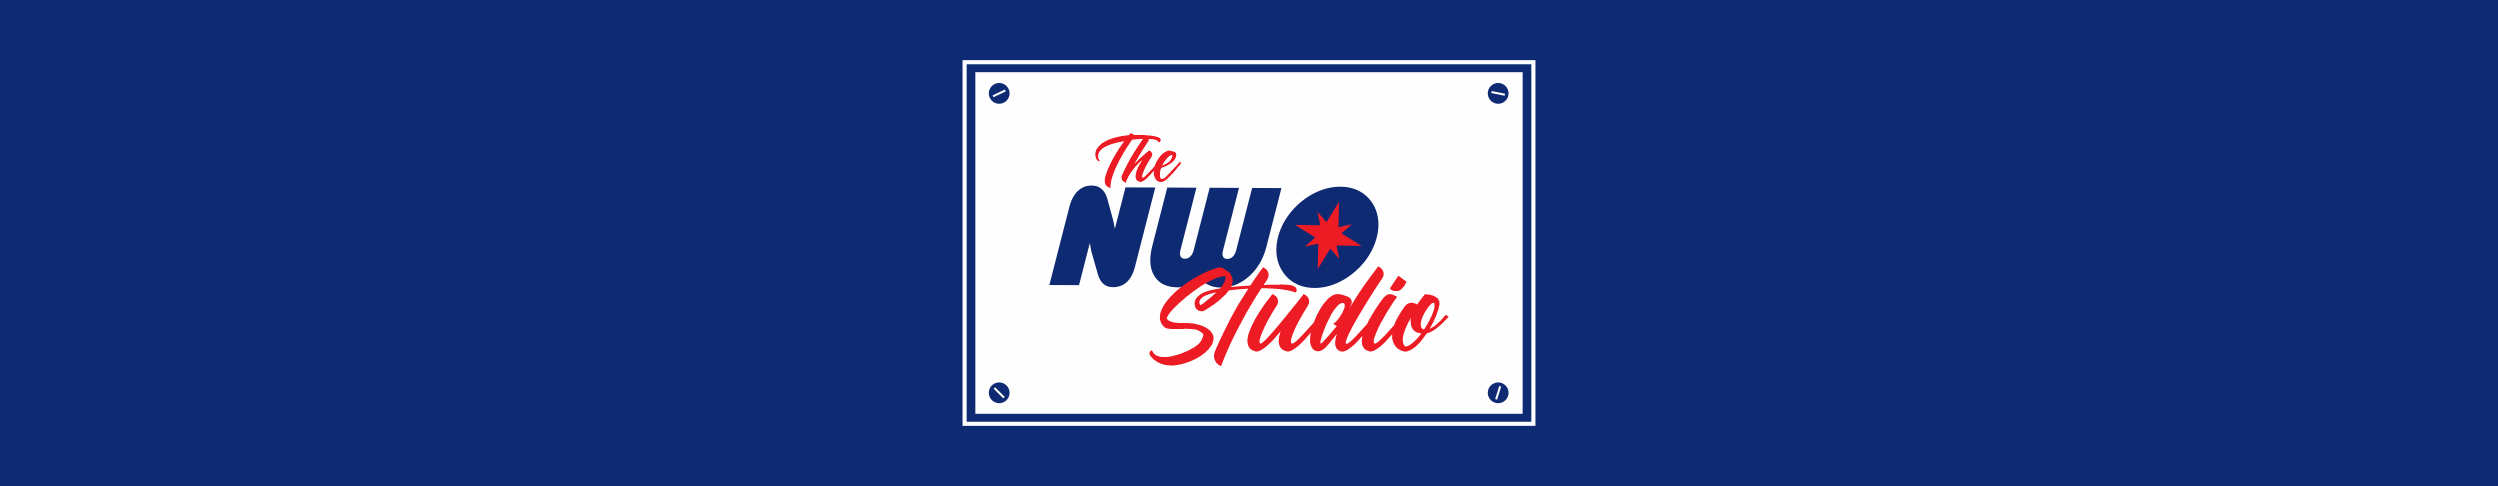 nwo studio logo